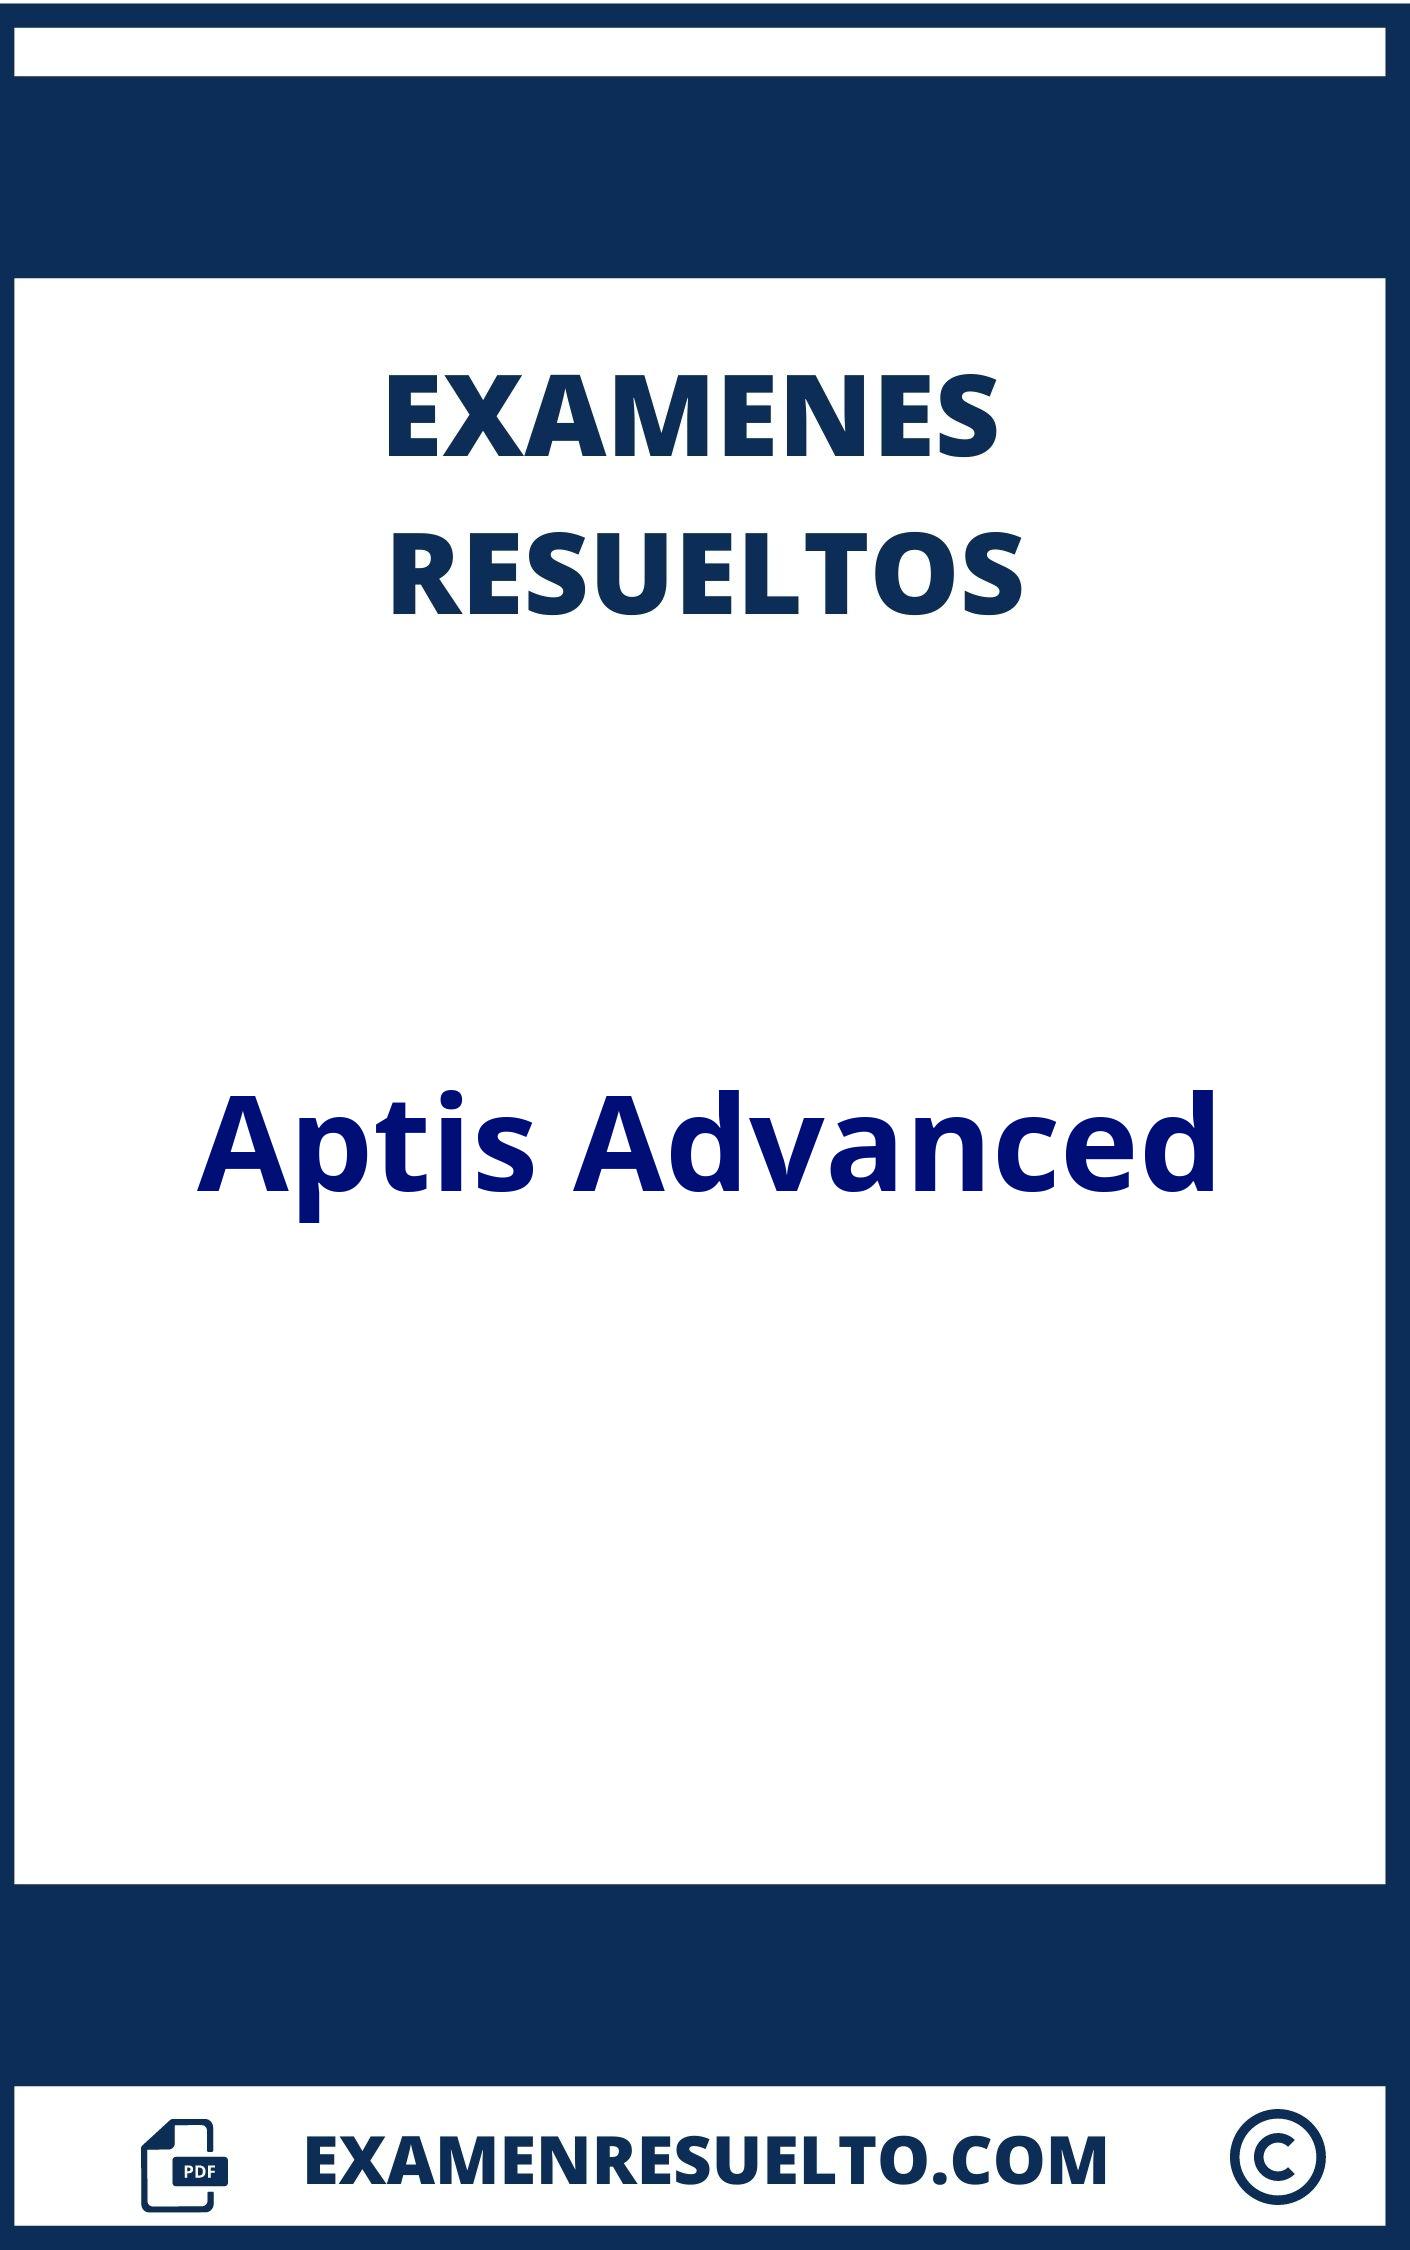 Examenes Aptis Advanced Resueltos